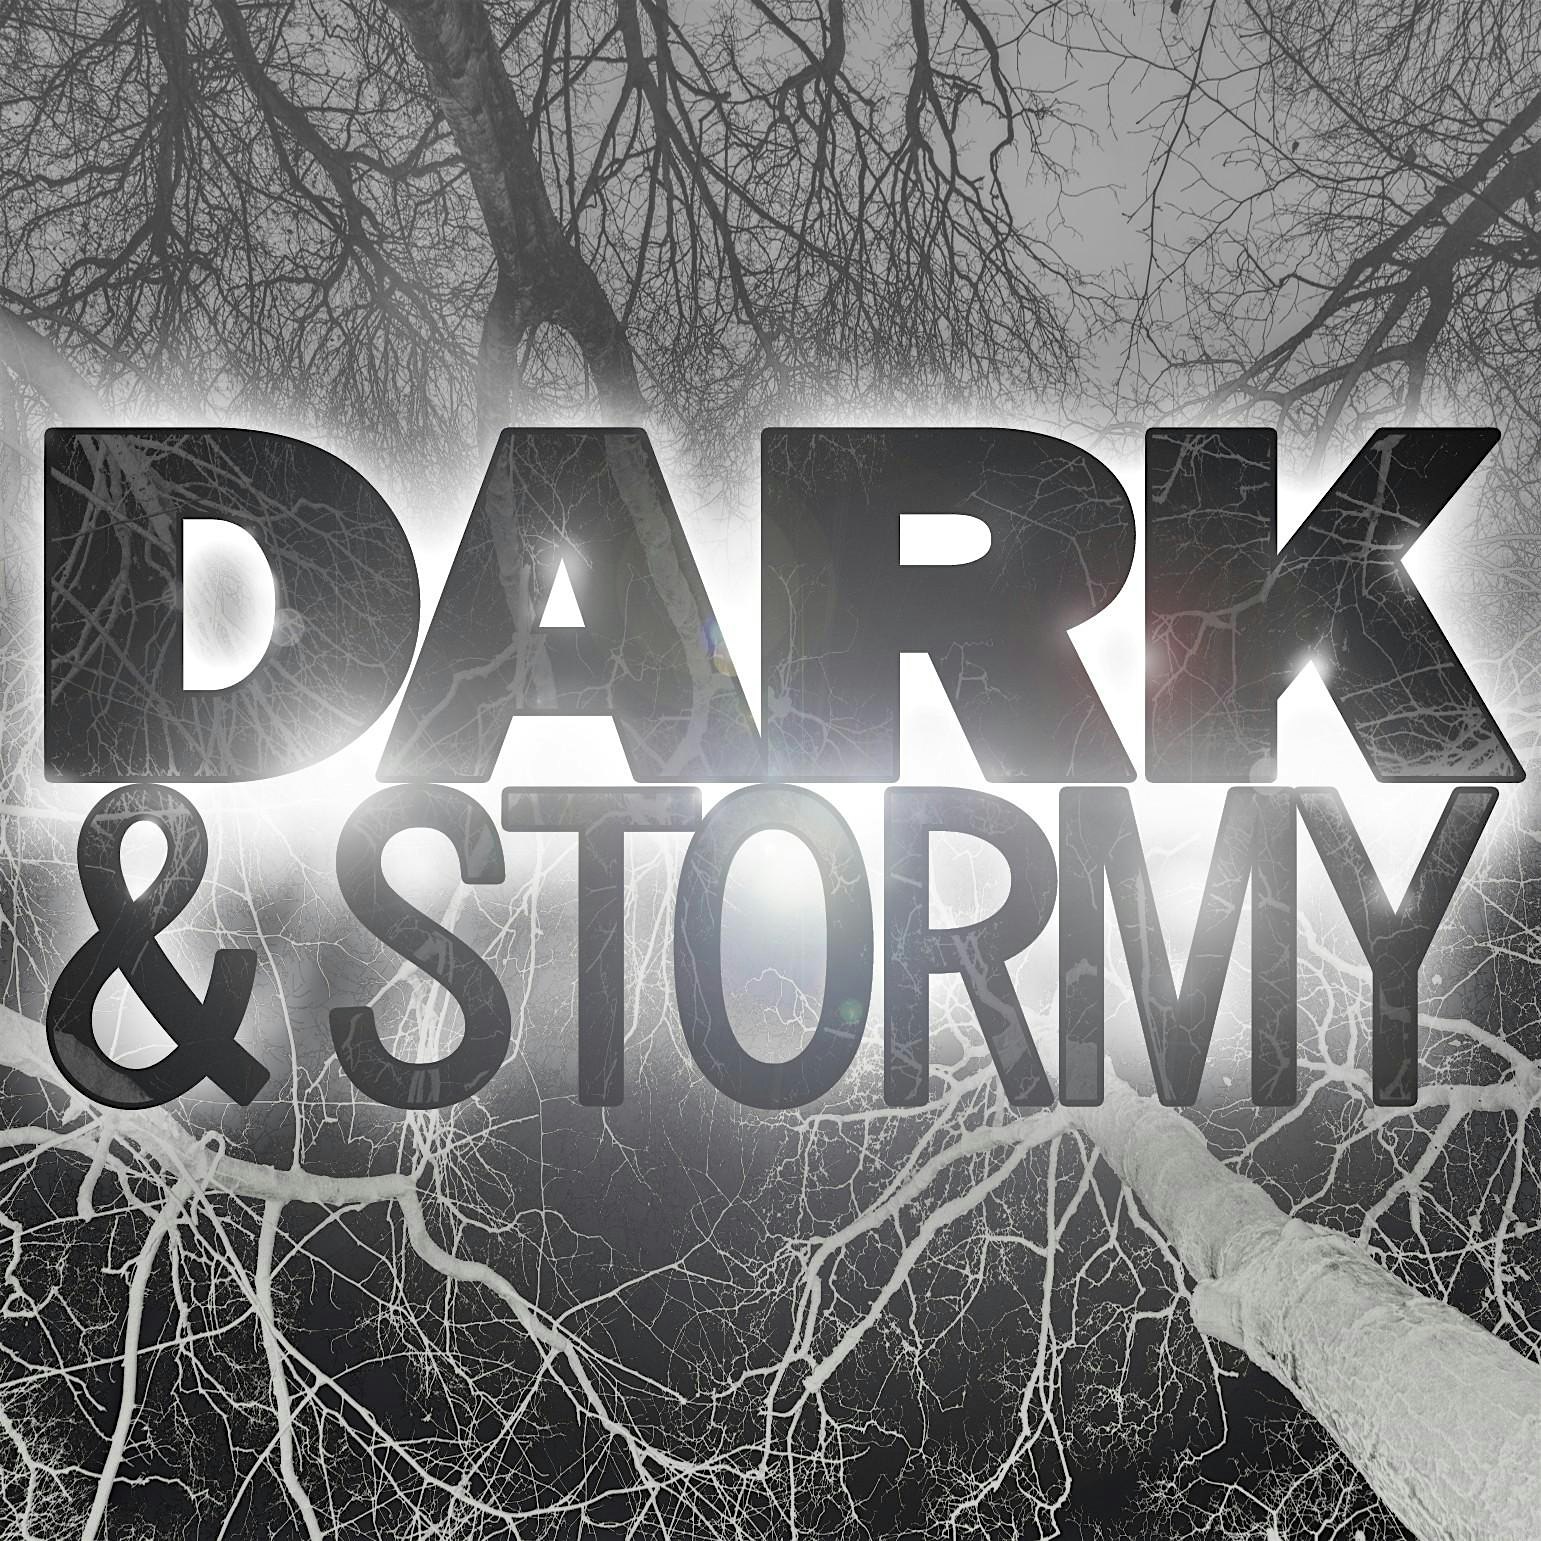 Dark & Stormy